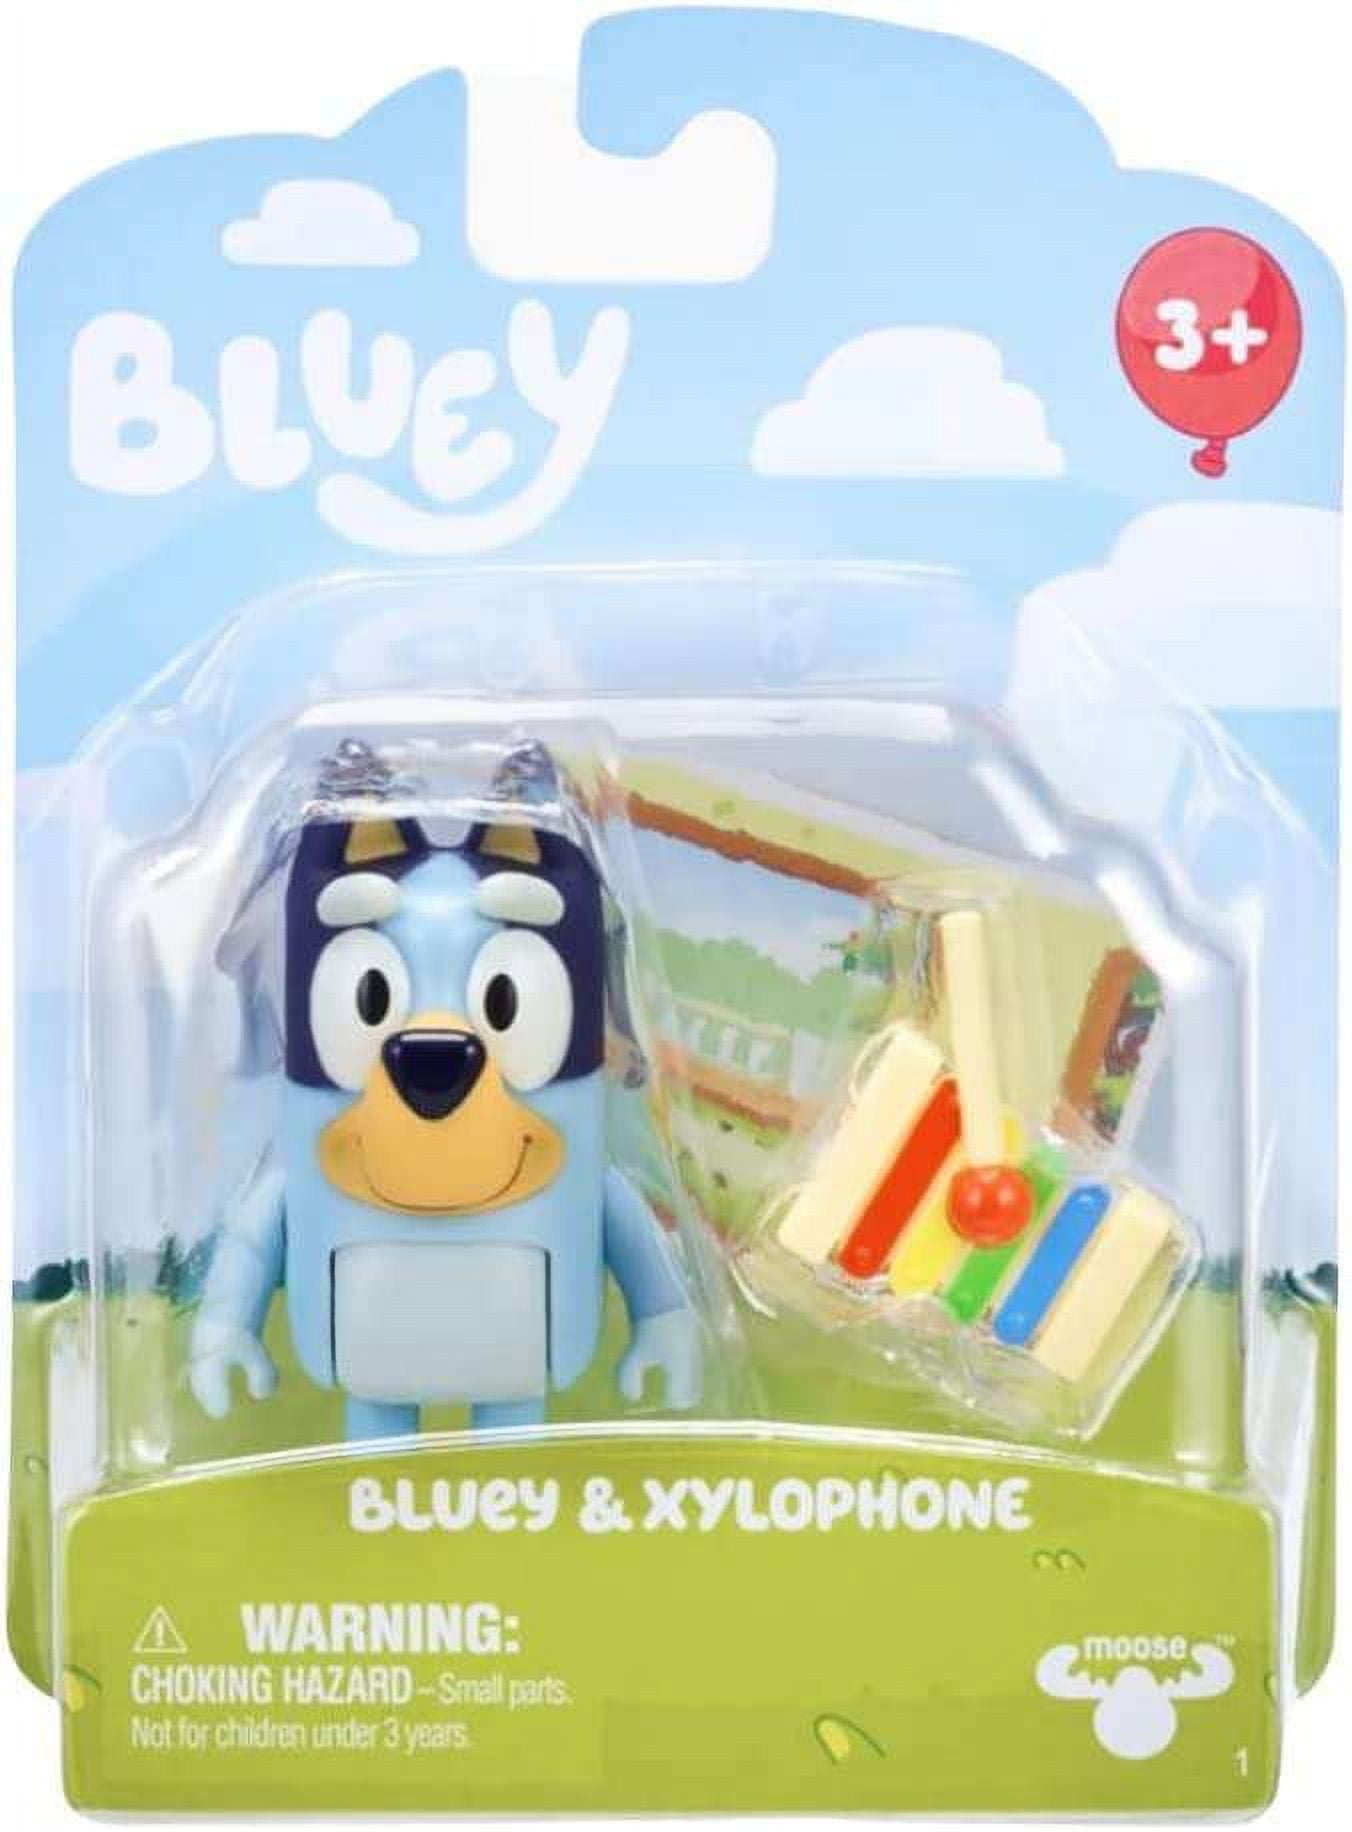 Bluey & Xylophone Mini Figure & Accessory